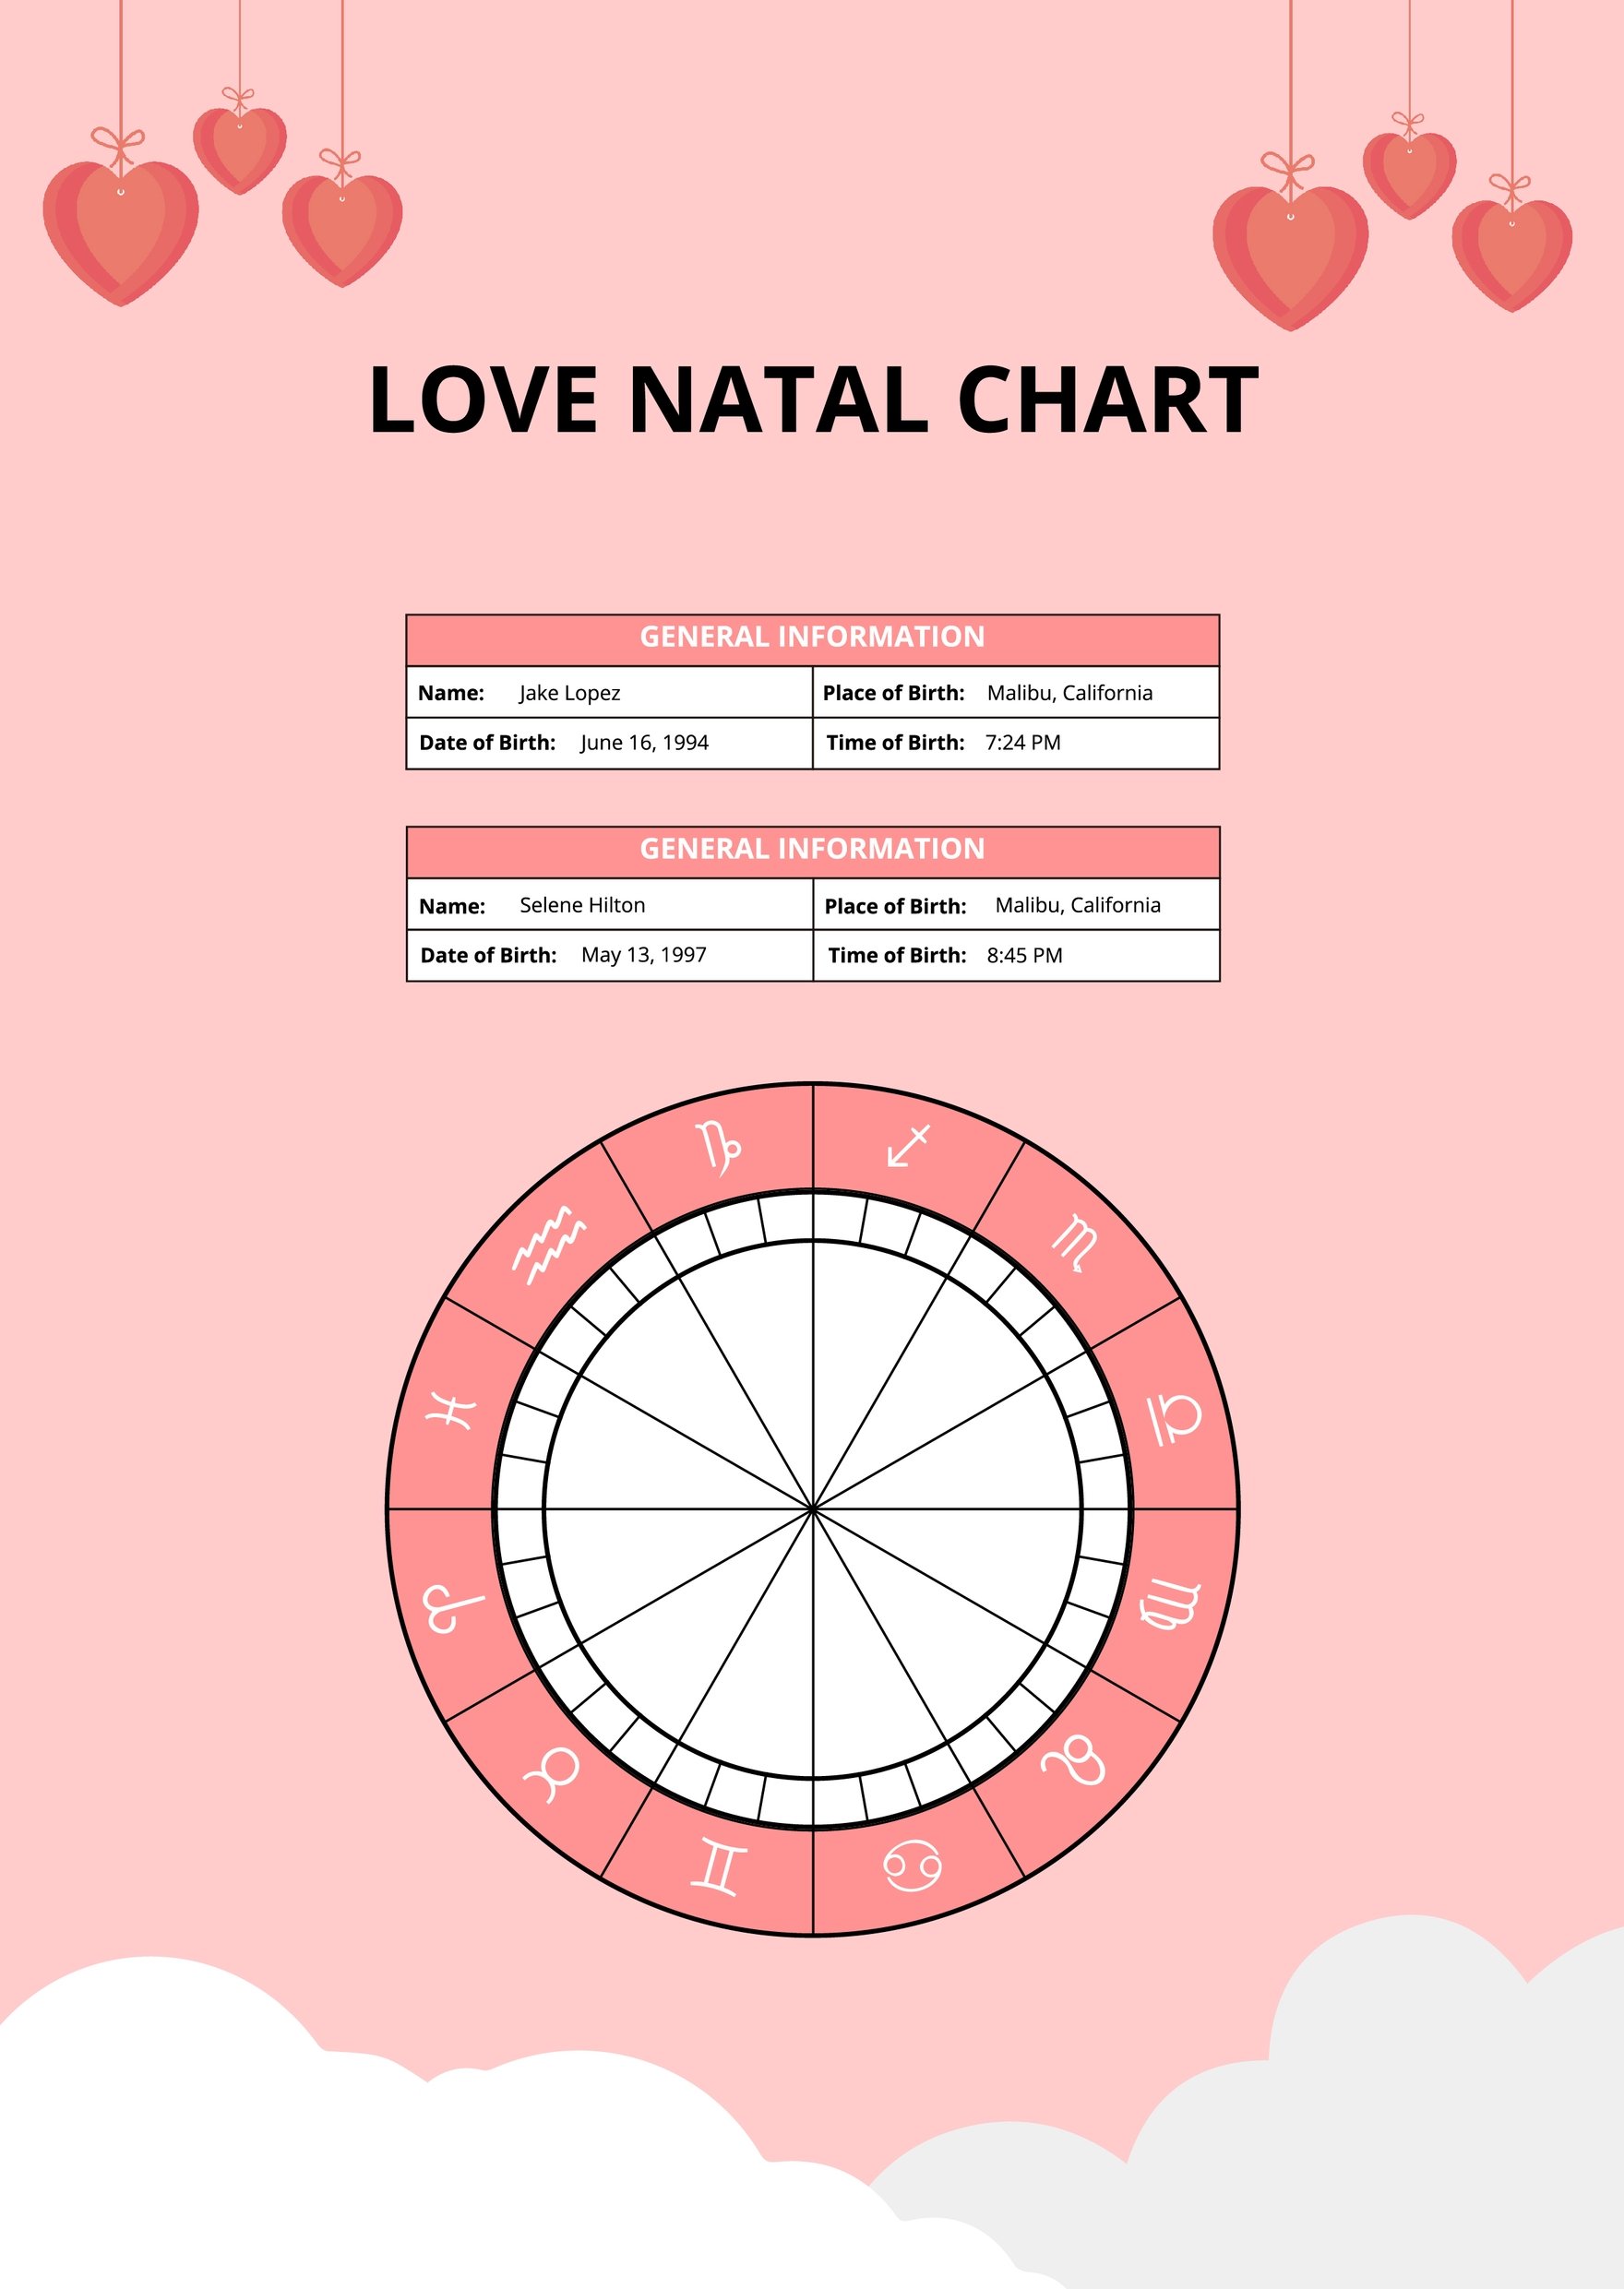 Love Natal Chart Template